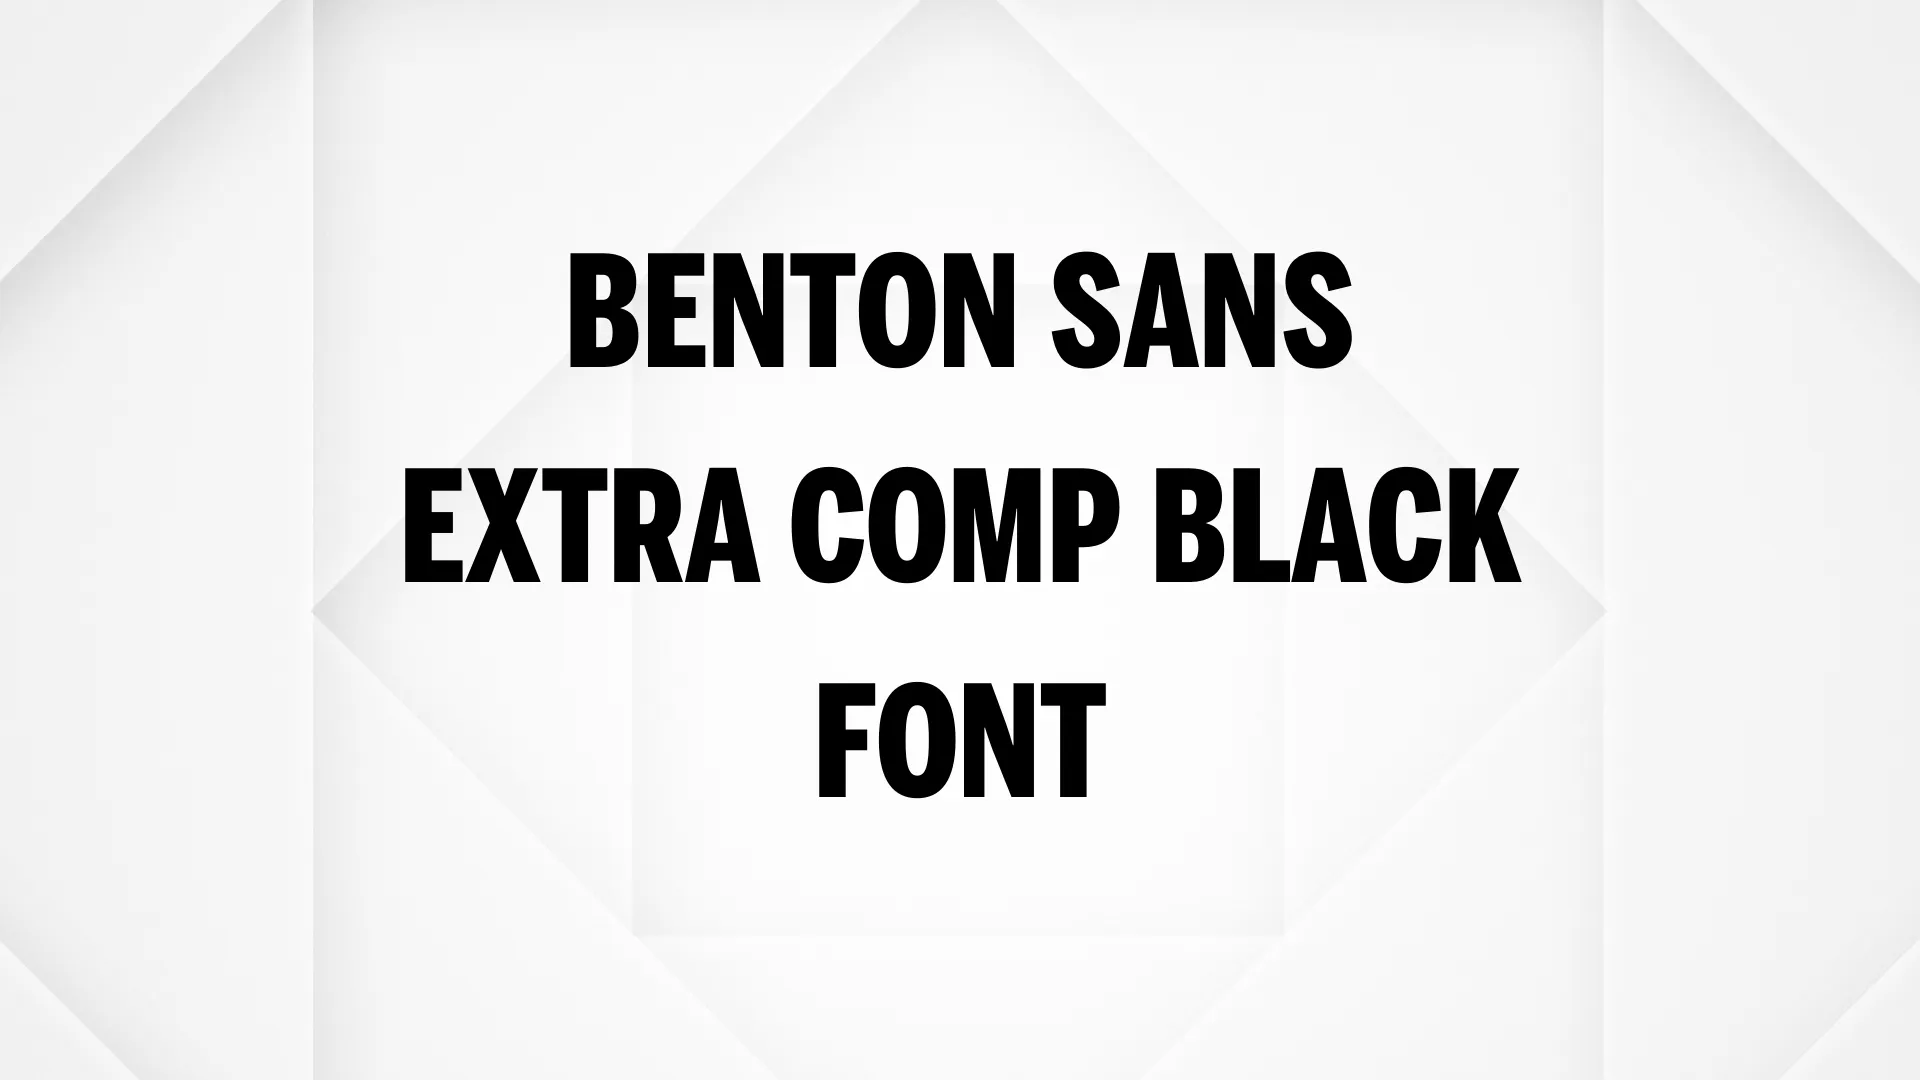 Benton Sans Extra Comp Black Font